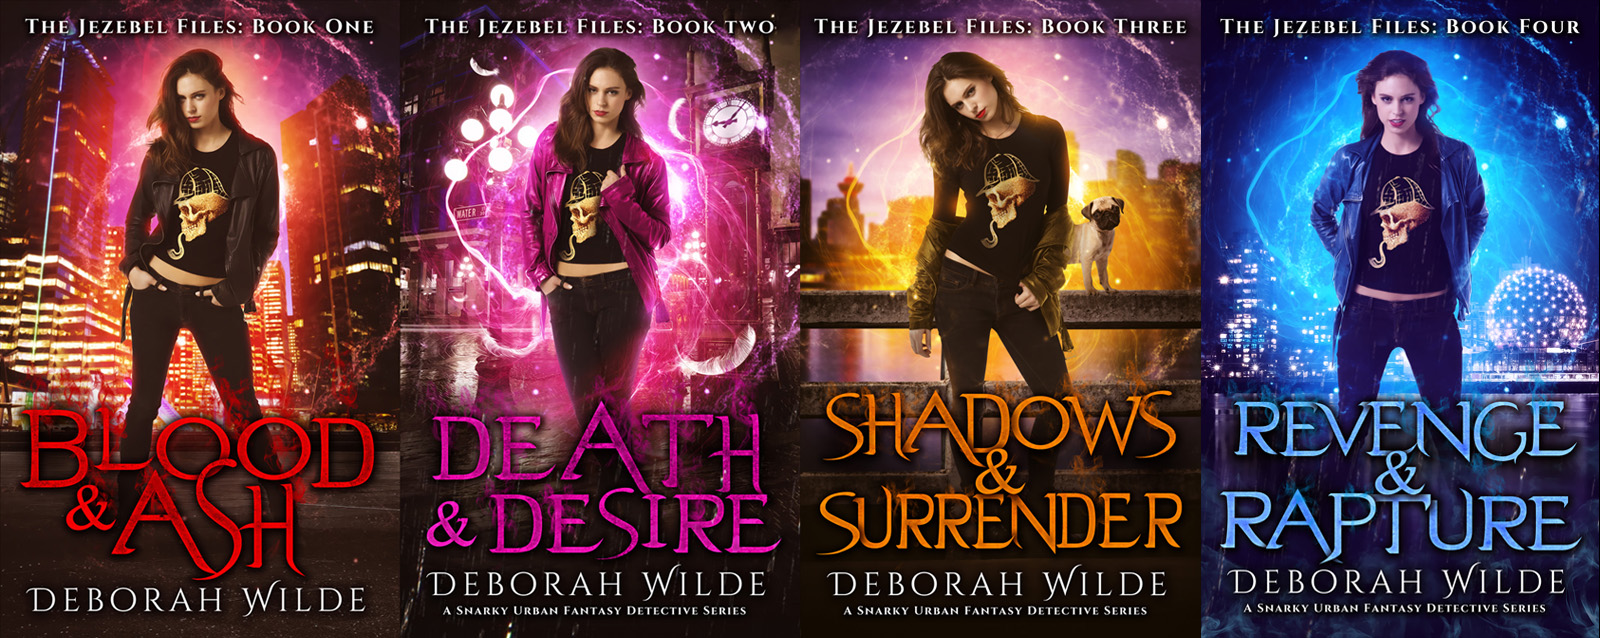 Covers of books in the Jezebel series by urban fantasy author Deborah Wilde.